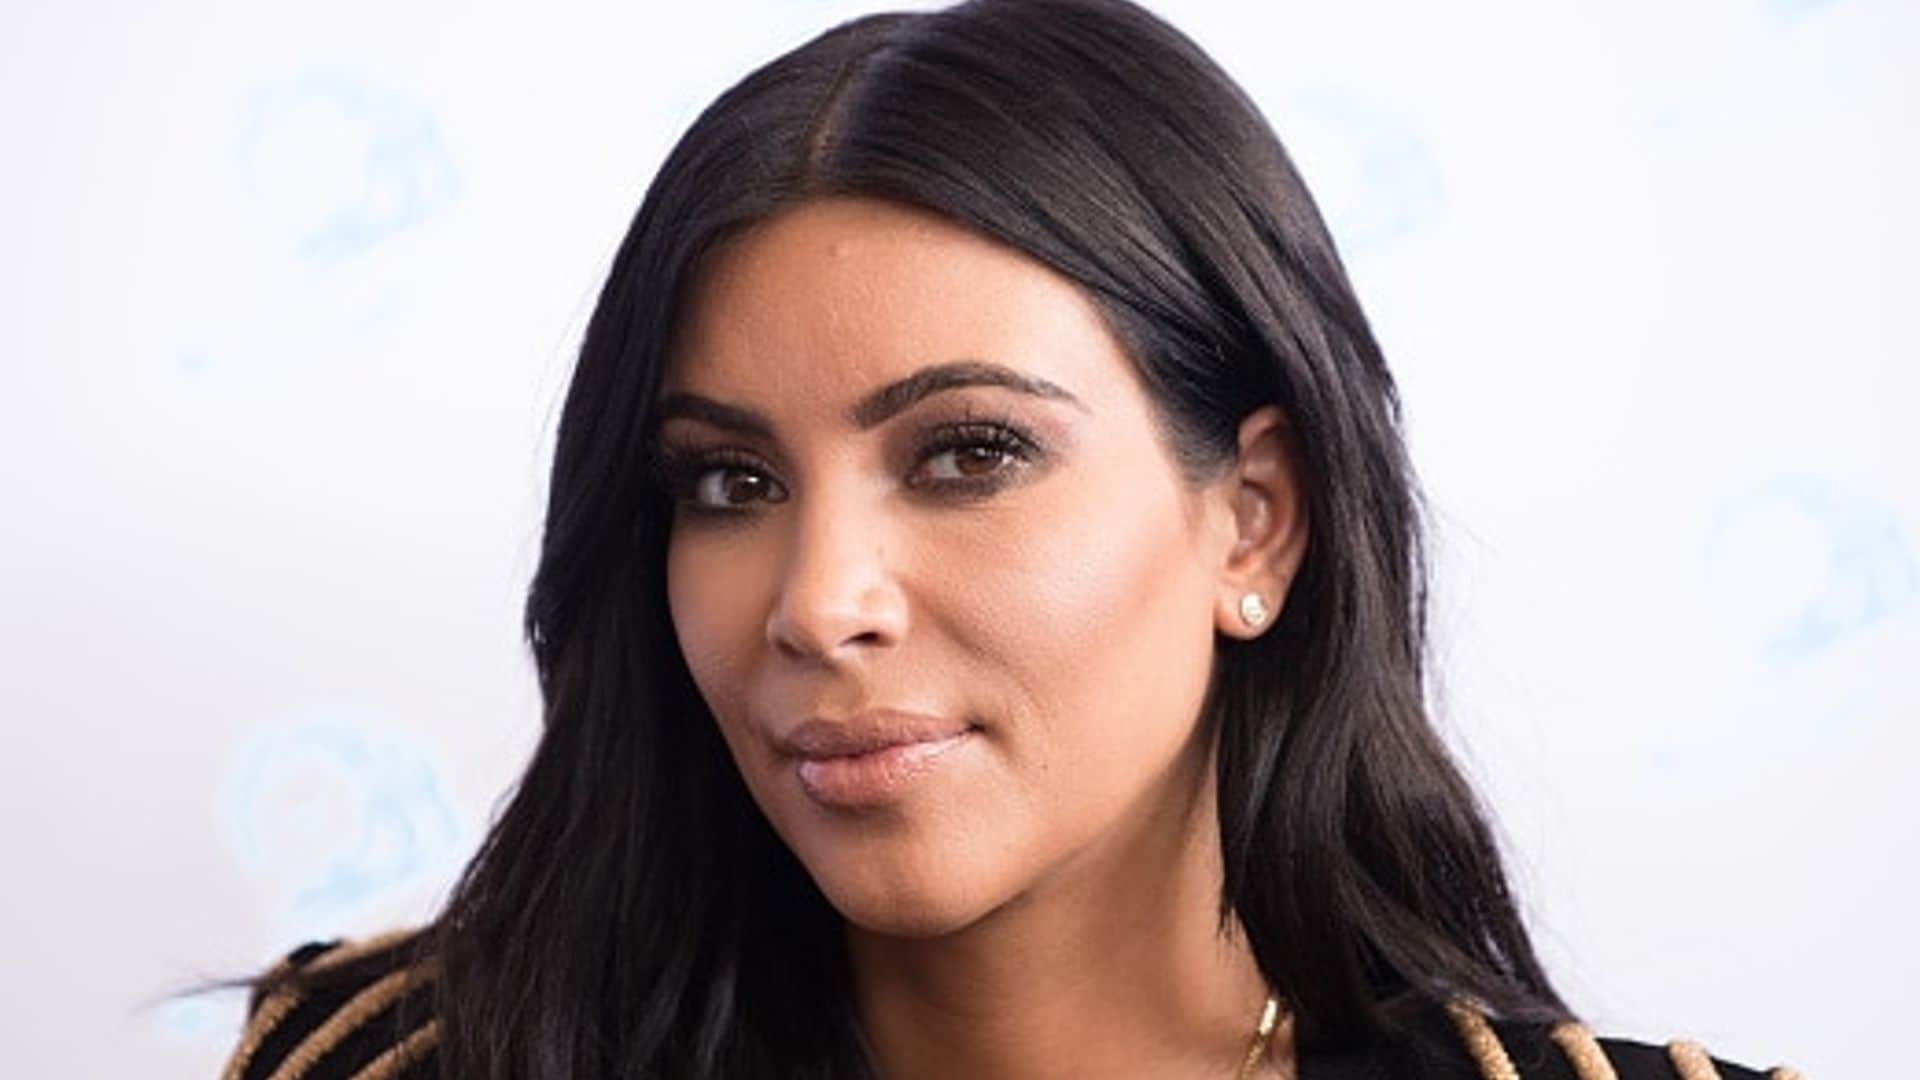 Kim Kardashian makes charitable donation while breastfeeding son Saint West